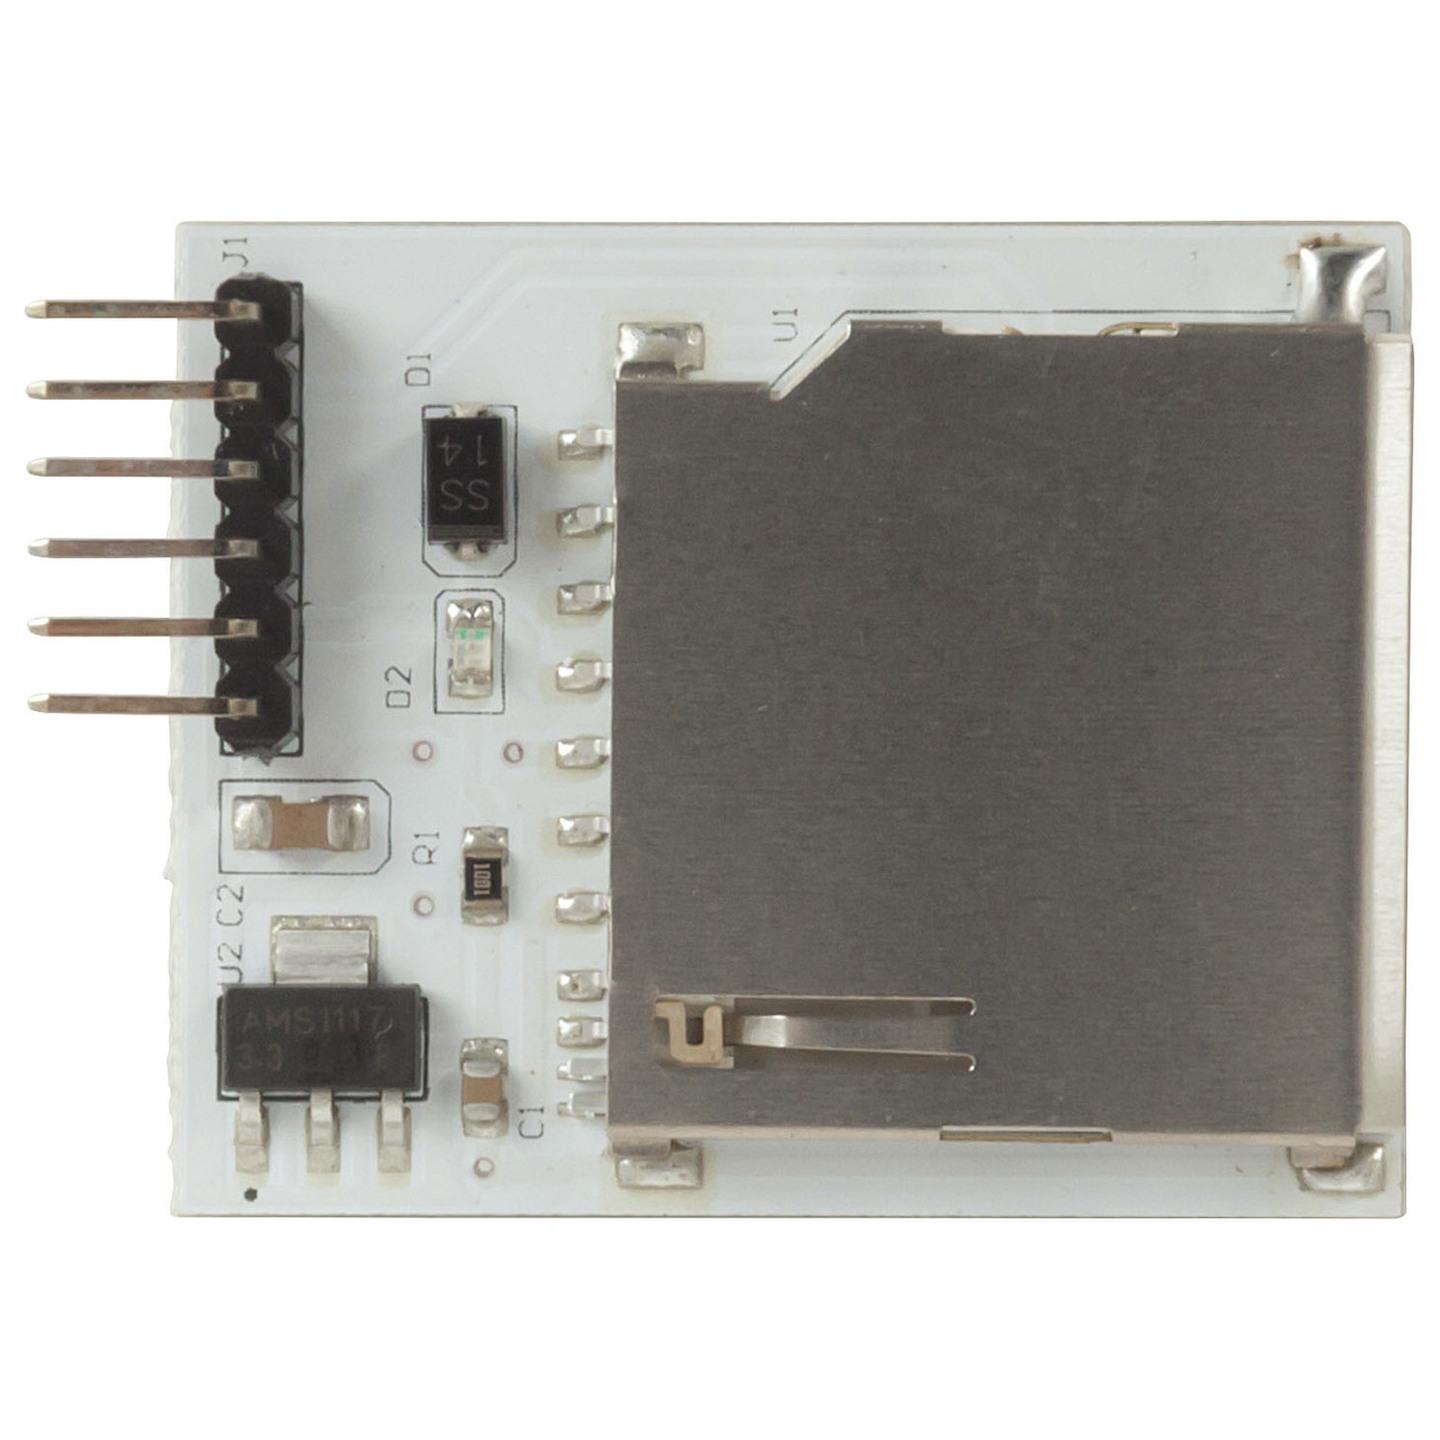 SD Card Breakout Board for Arduino